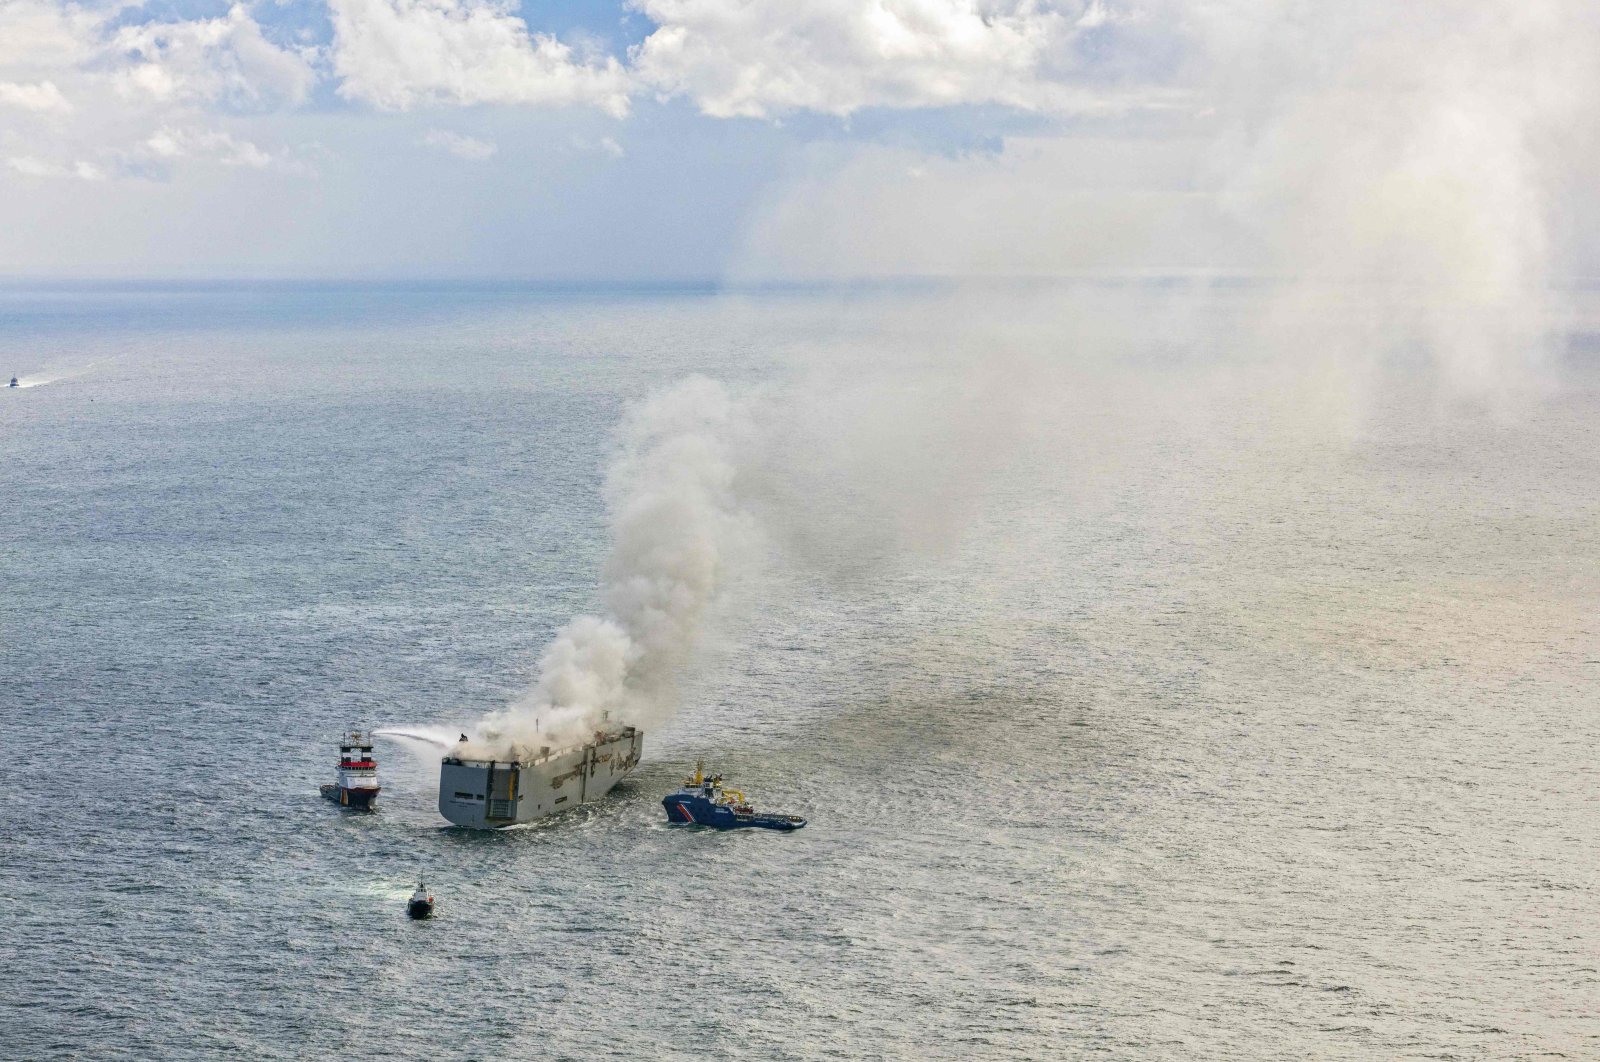 Ship carrying 3,000 cars burns off Dutch coast, 1 person dead